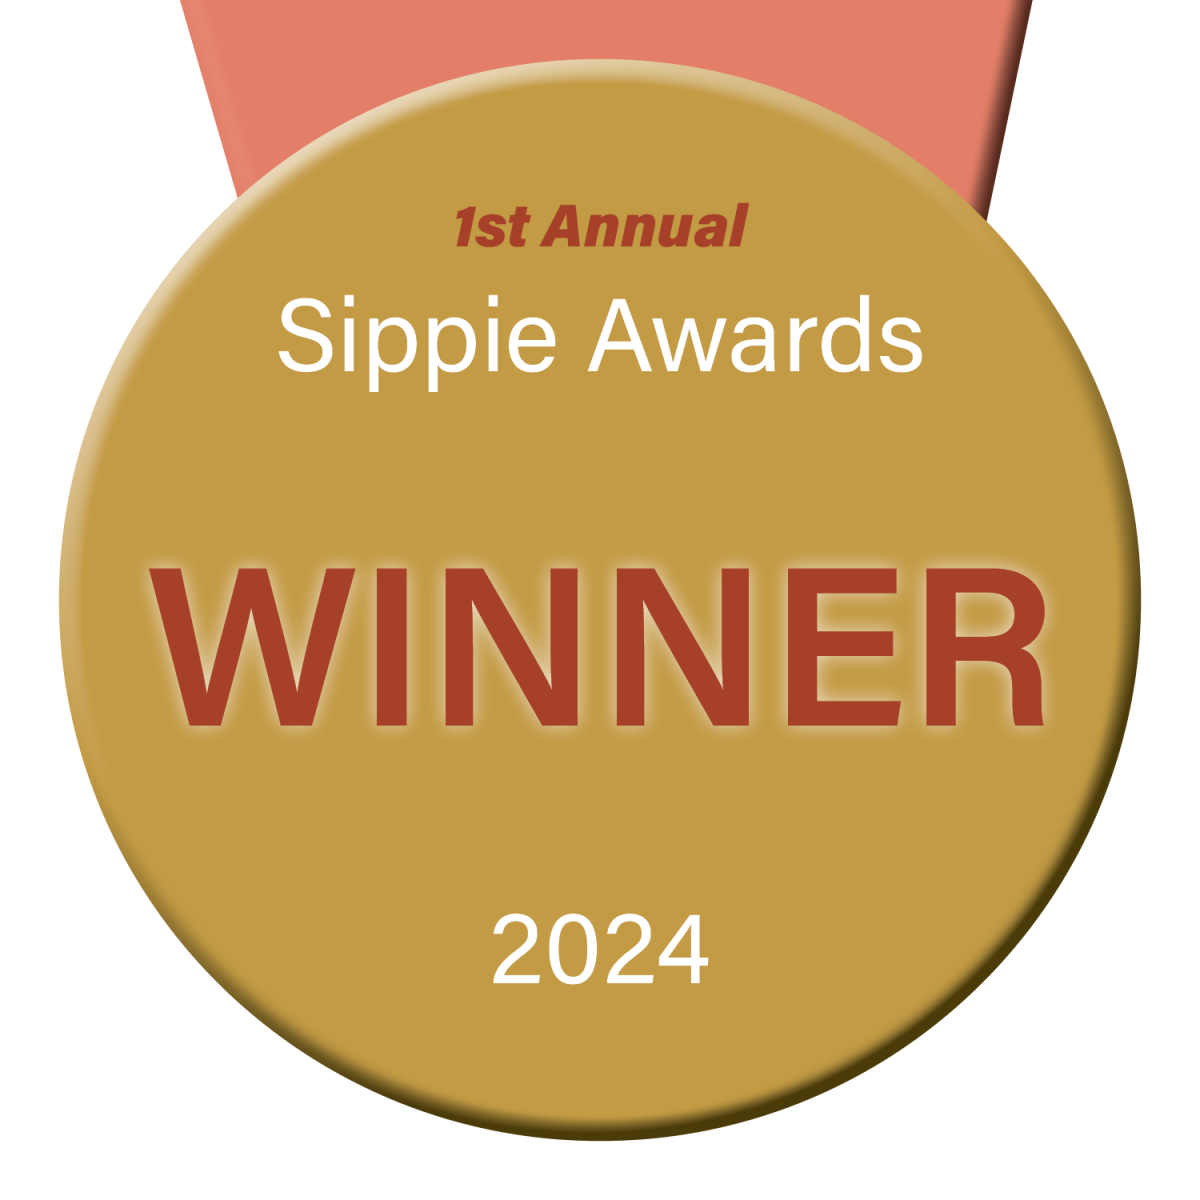 1st Annual Sippie Award Winners